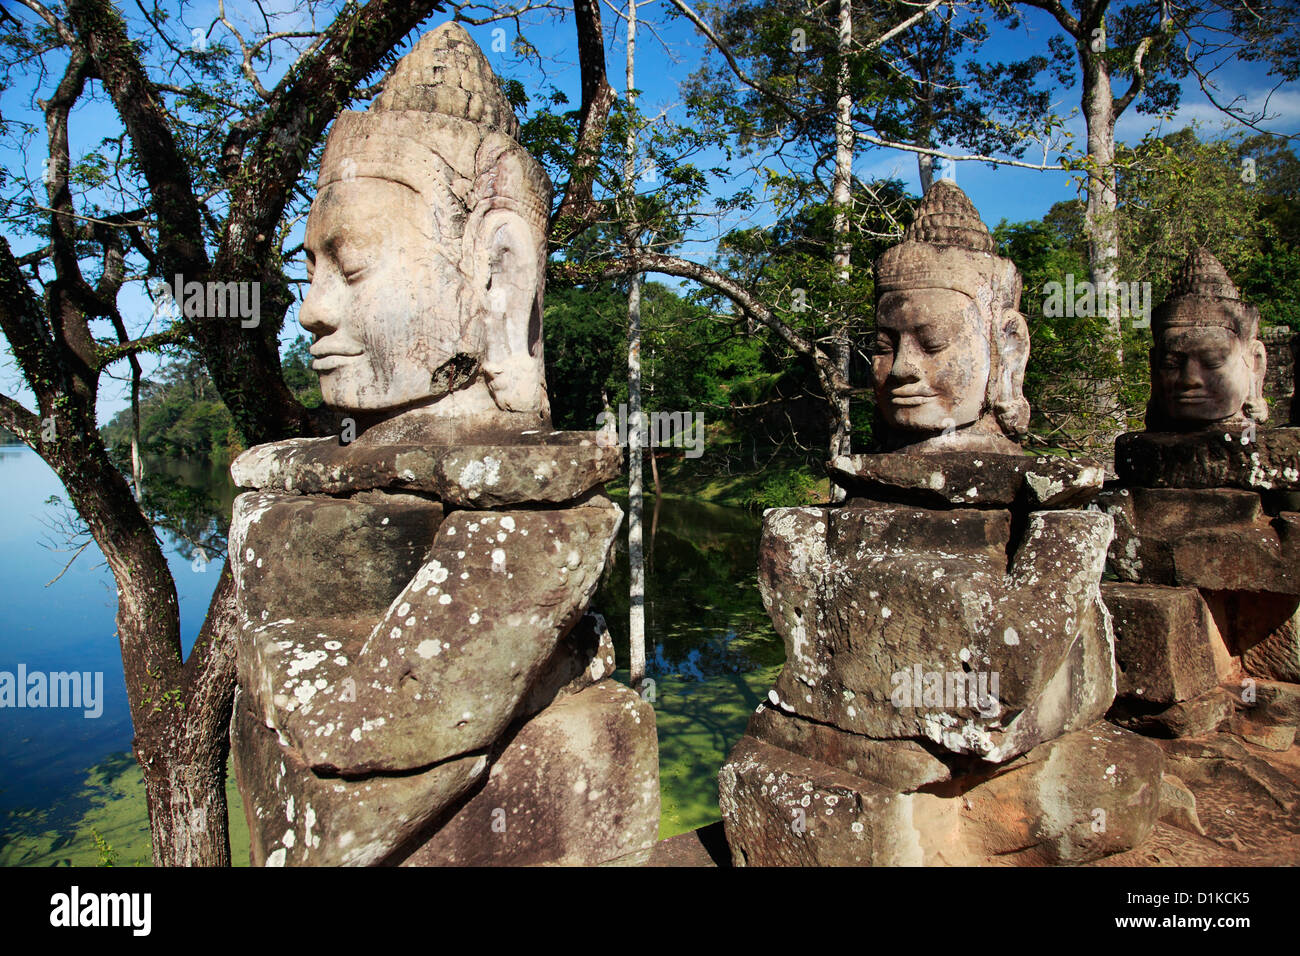 Stone carving of deities near a lake, Angkor Wat, Cambodia Stock Photo